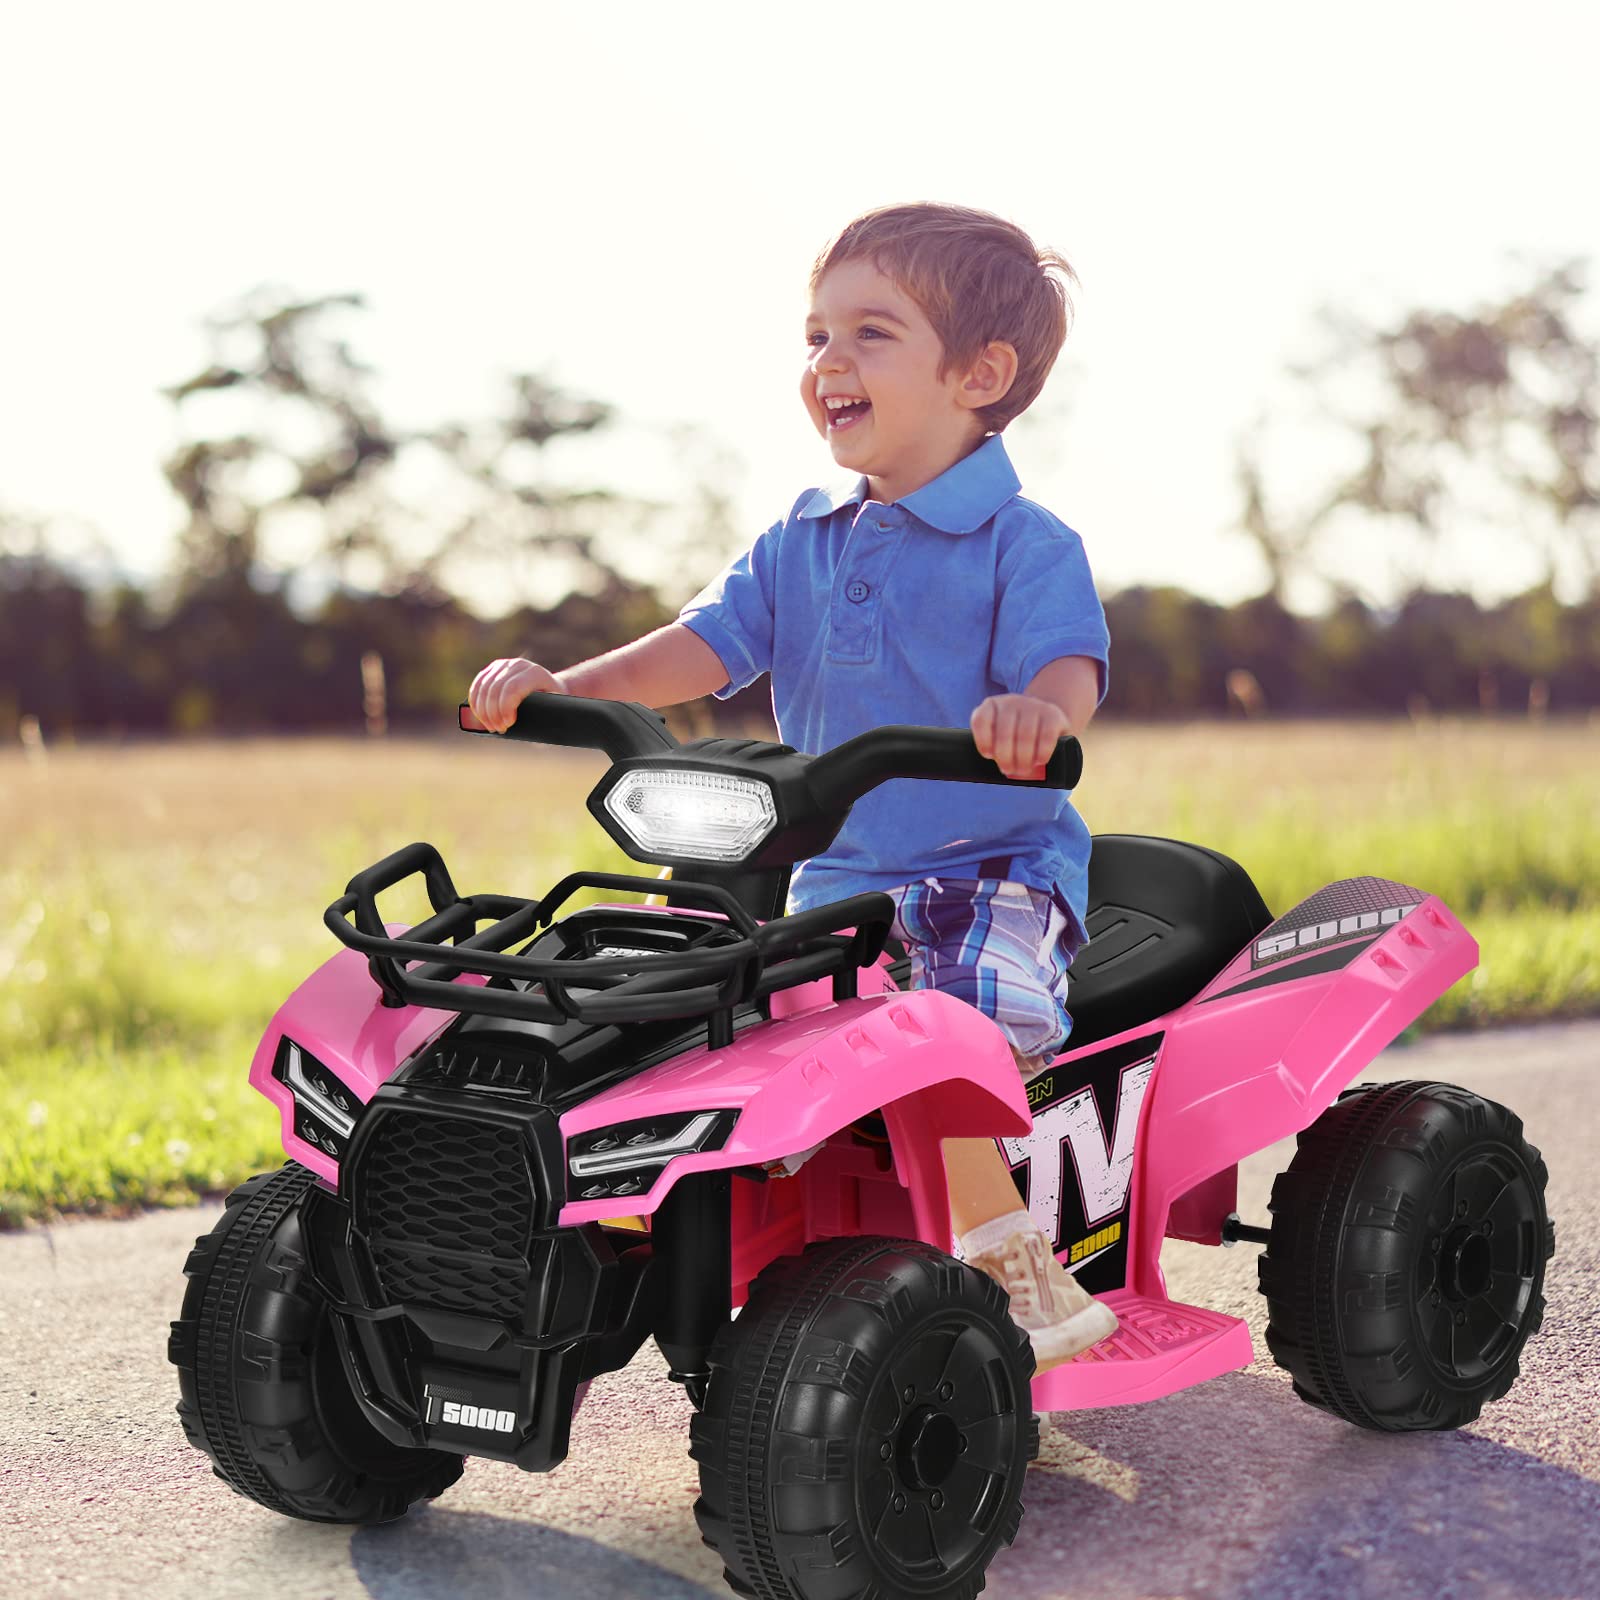 HONEY JOY Kids ATV, 4 Wheeler Battery Powered Toddler Quad with Storage Box, Horn, Music, LED Headlights, 6V Ride On ATV Toy, Gift for Boys Girls(Pink)